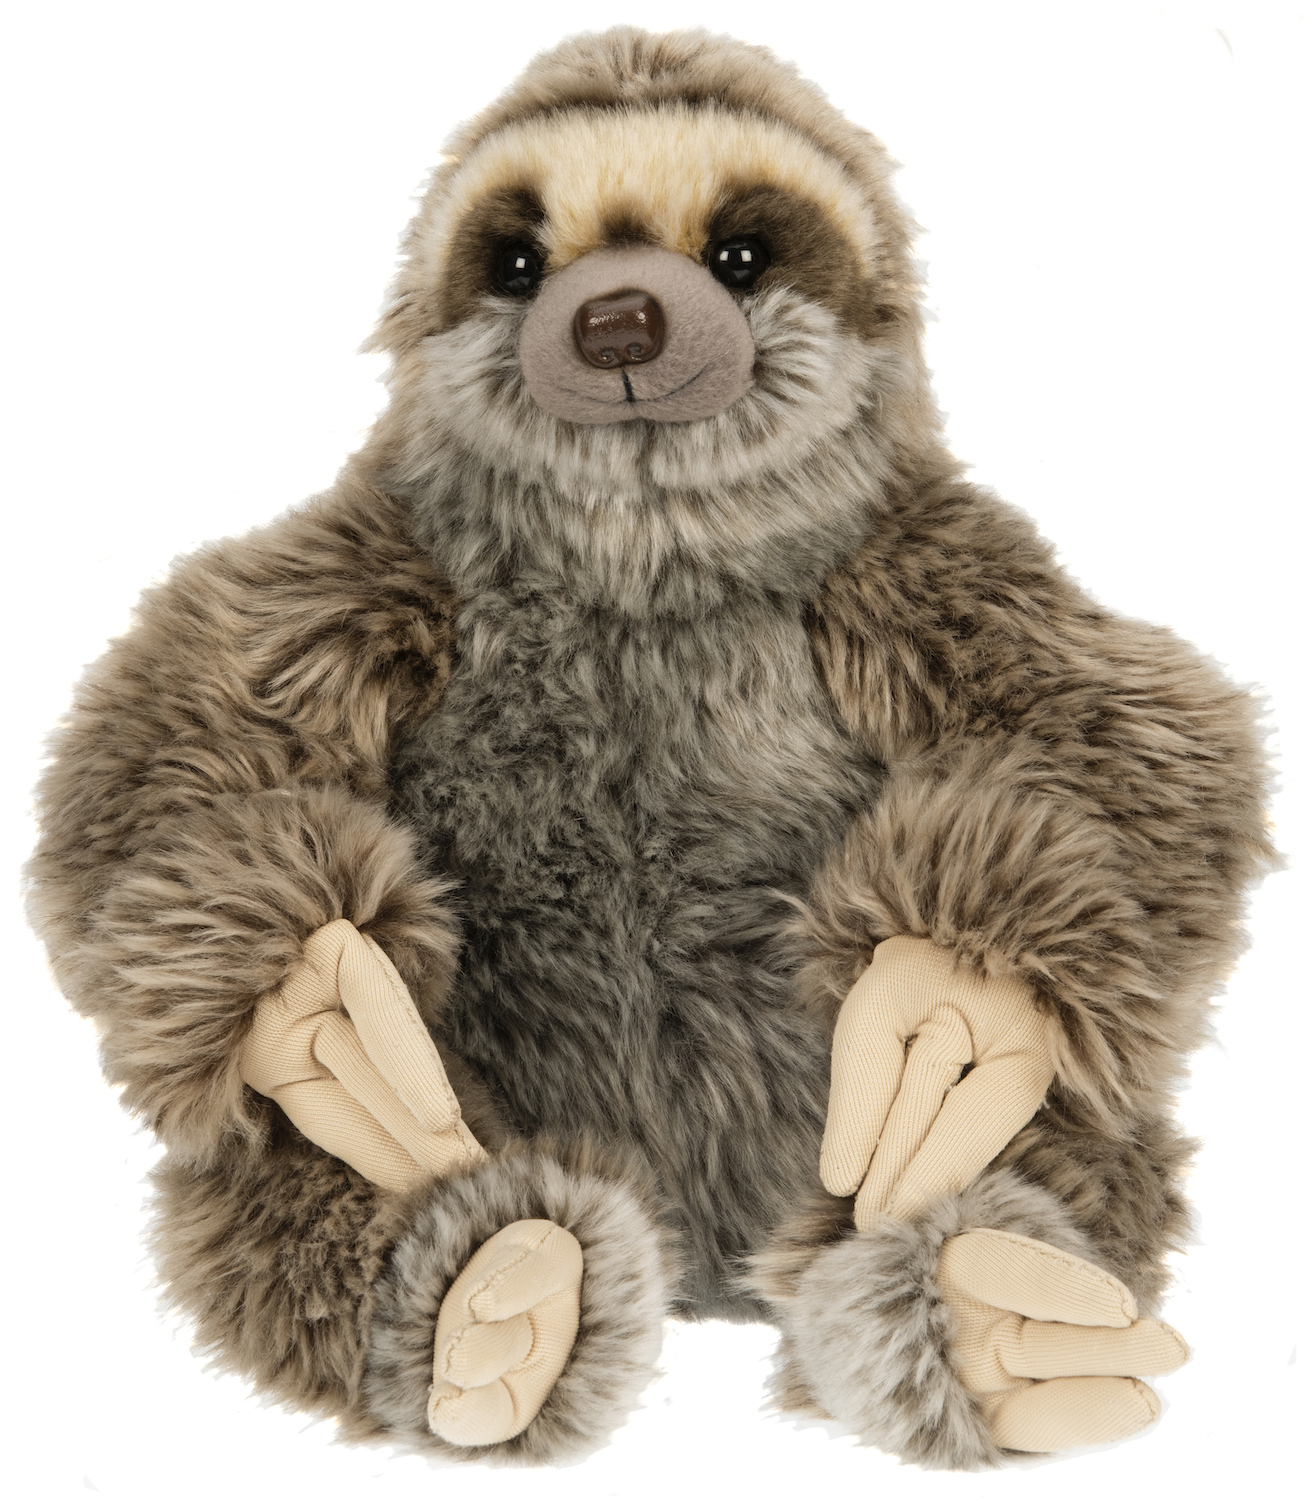  sloth sitting - 25 cm (height) -